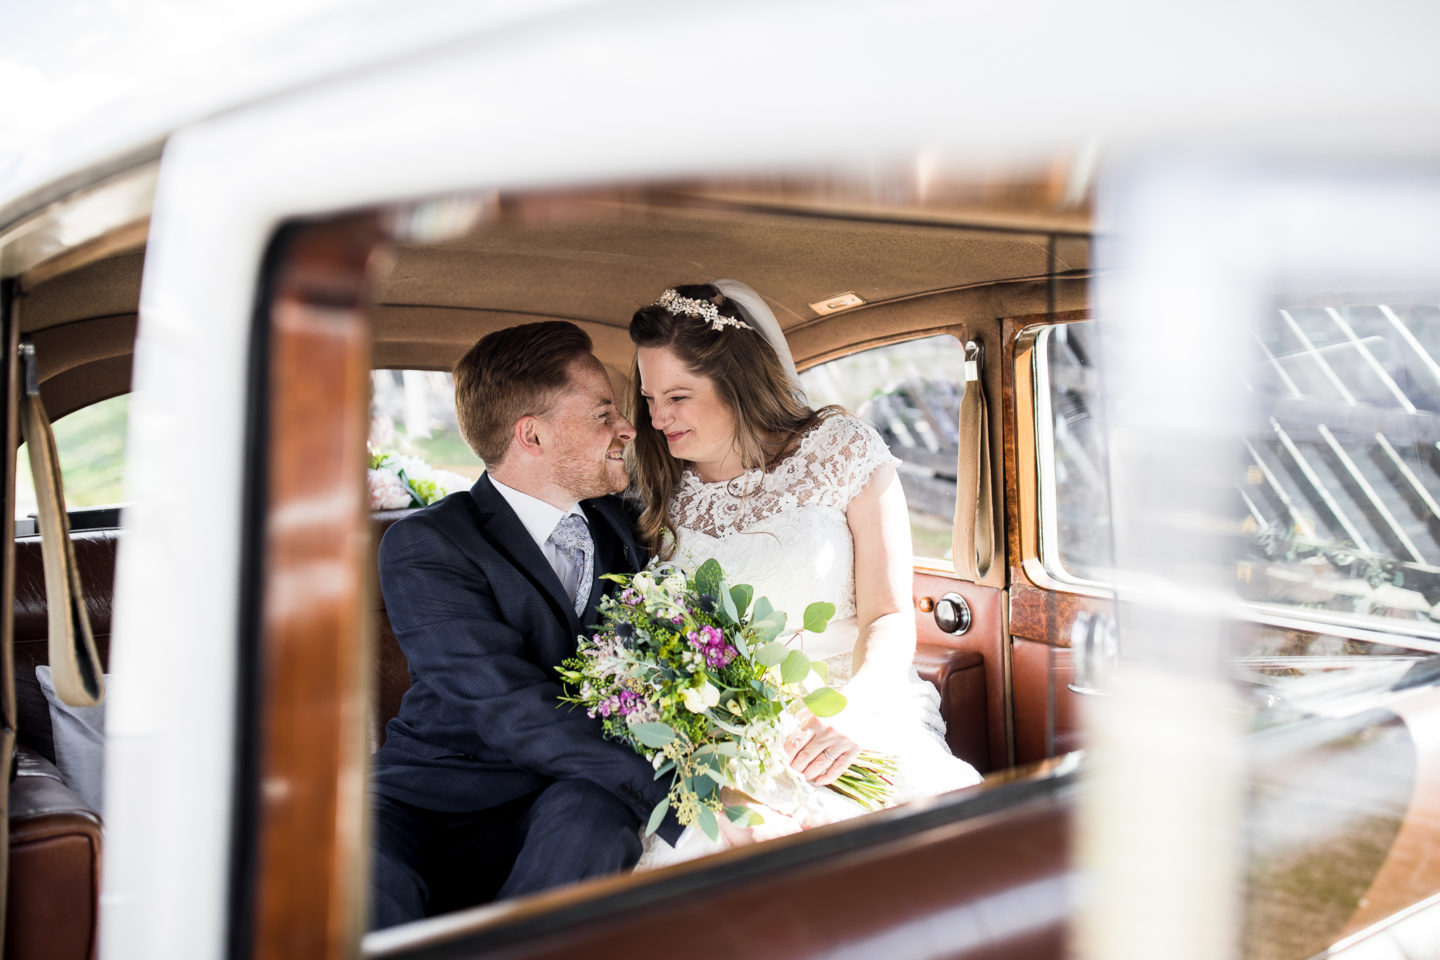 Vintage Disney Inspired Wedding at Buckinghamshire Railway Centre